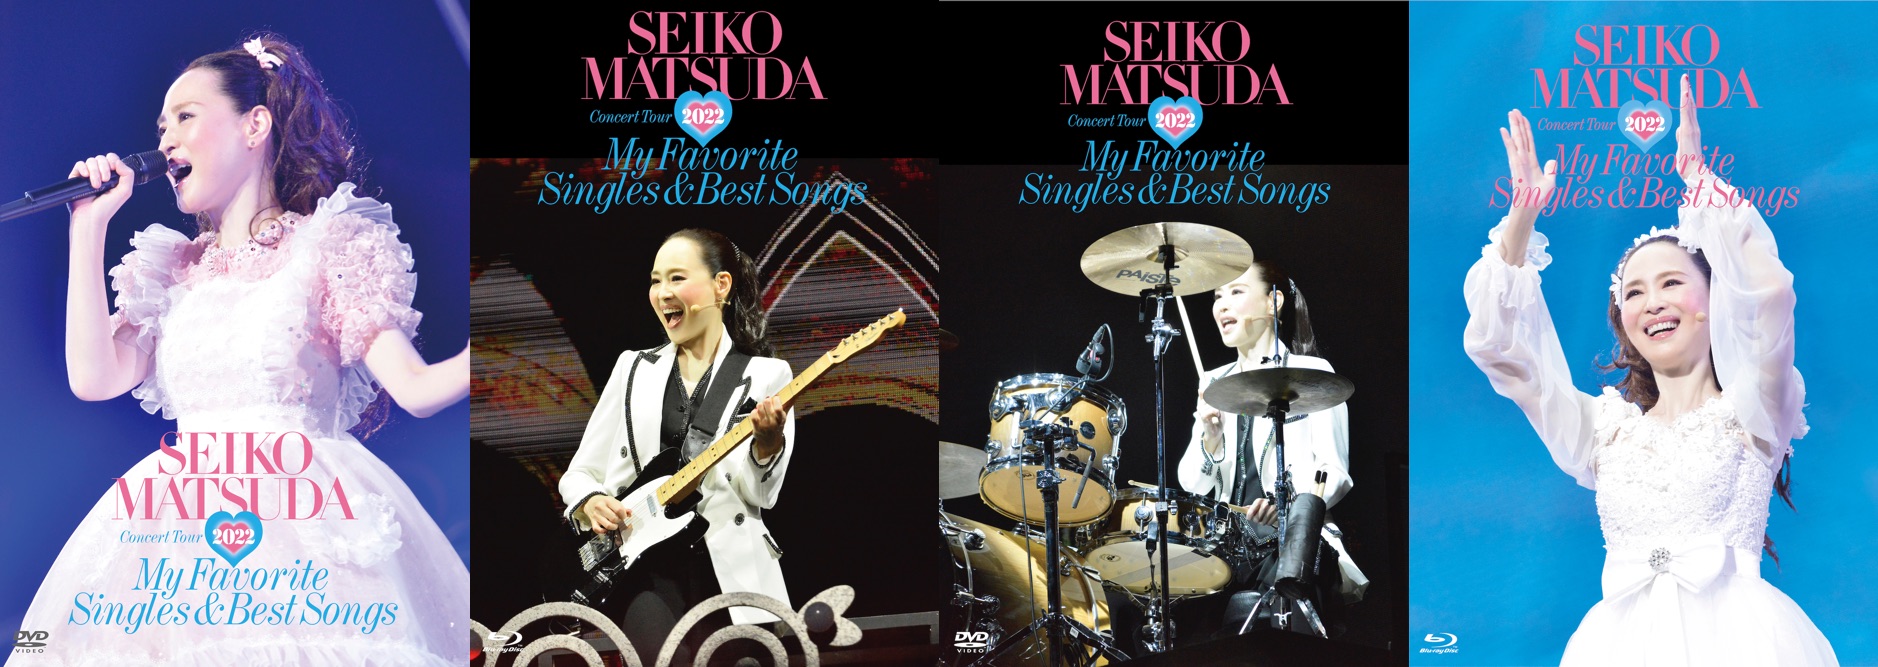 松田聖子/Seiko Matsuda Concert Tour 2022\